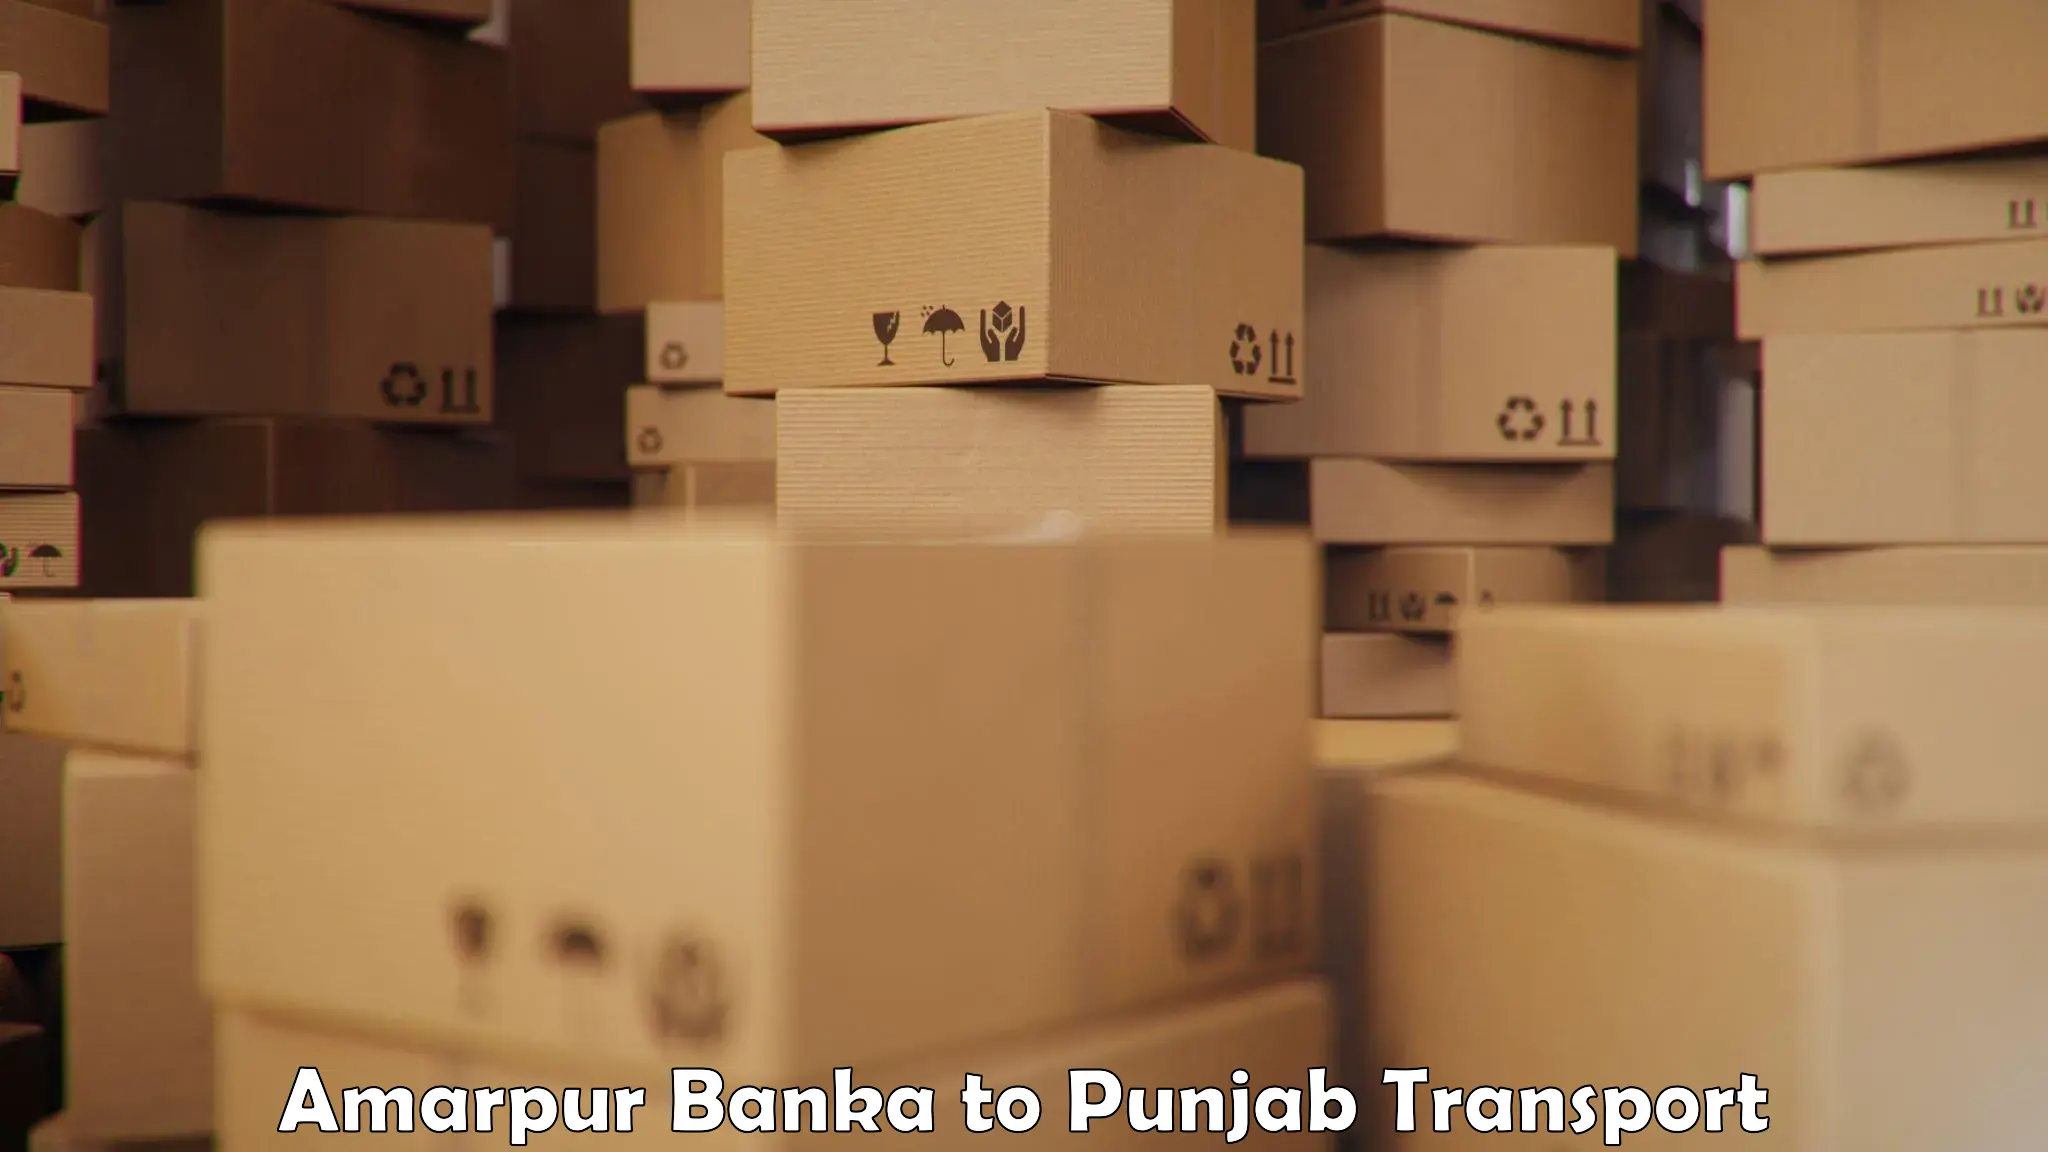 Goods delivery service Amarpur Banka to Machhiwara